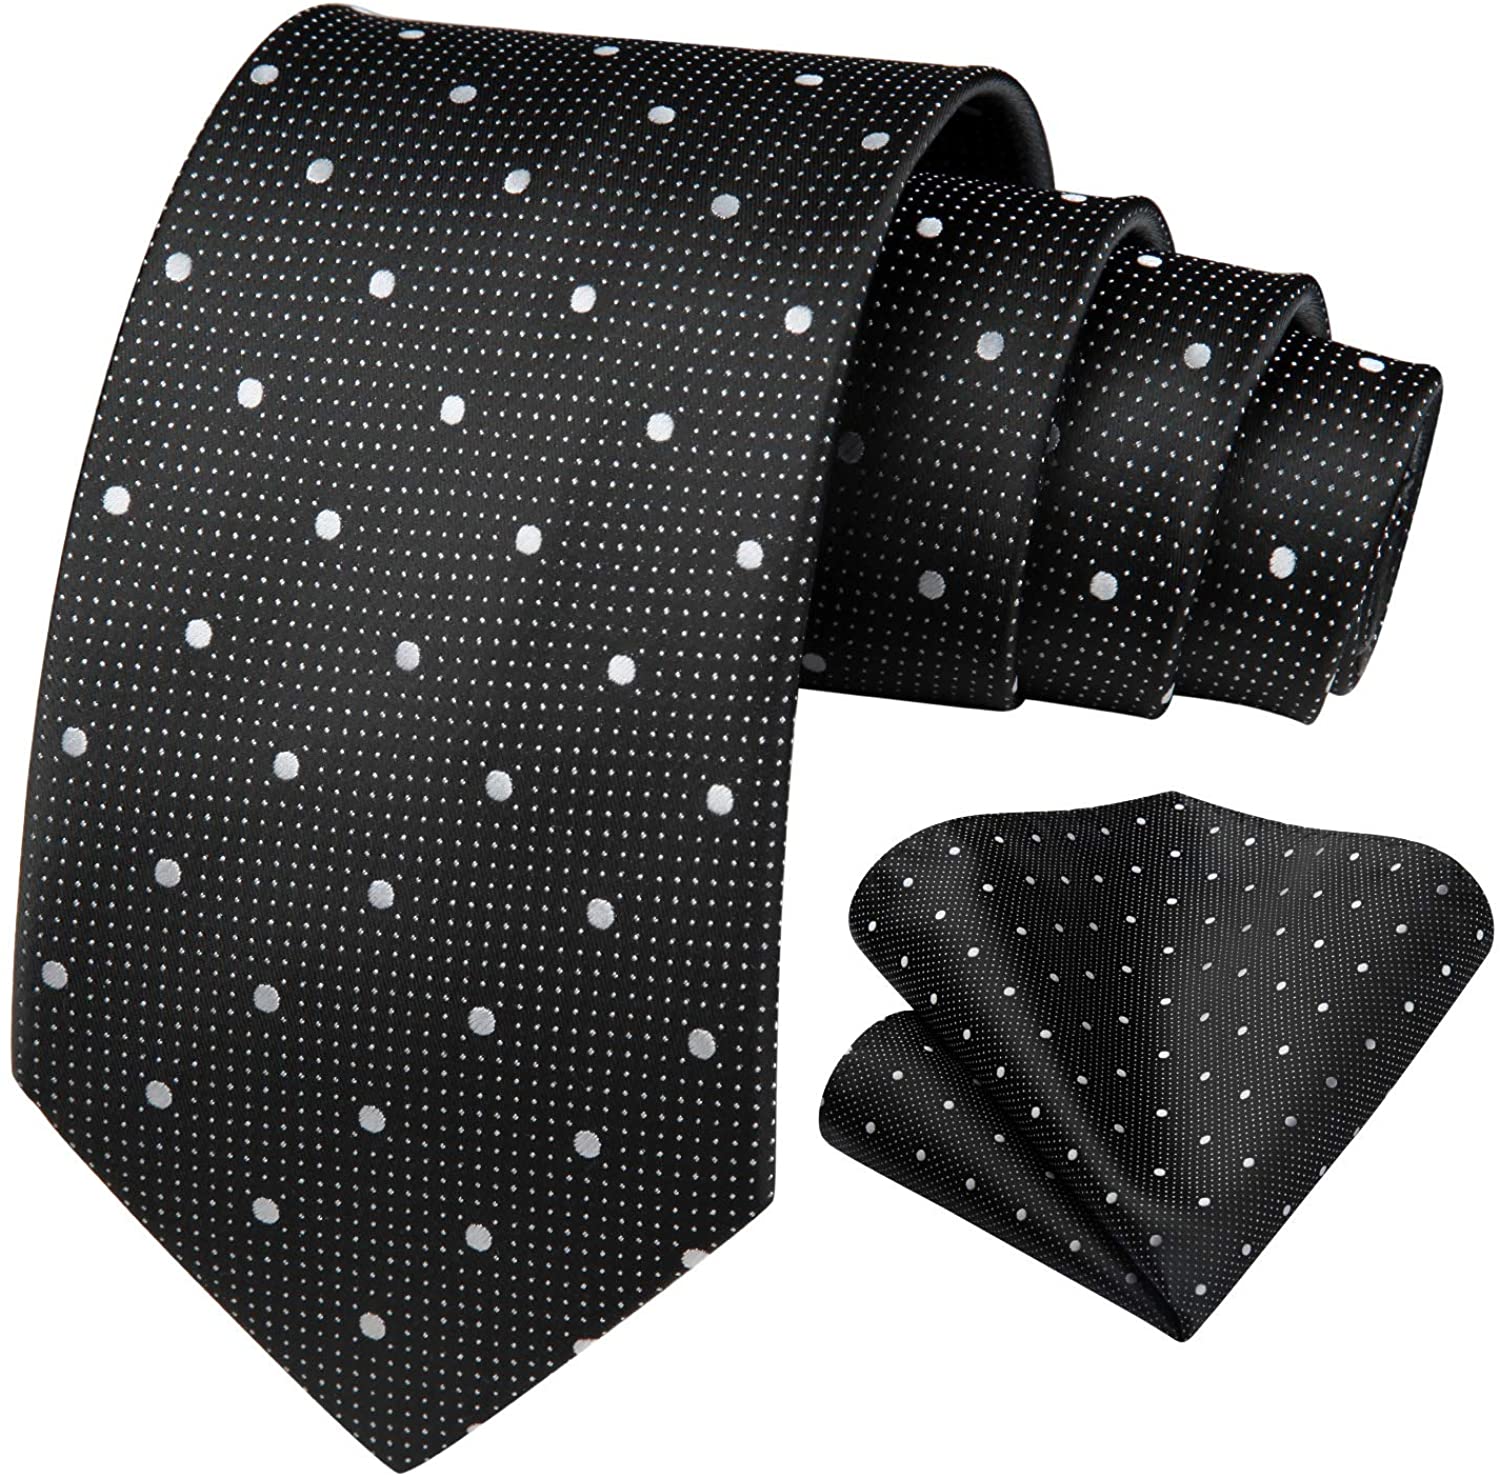 Handmade Black and White Polka Dot Classic Men's Tie Pocket Square Set 